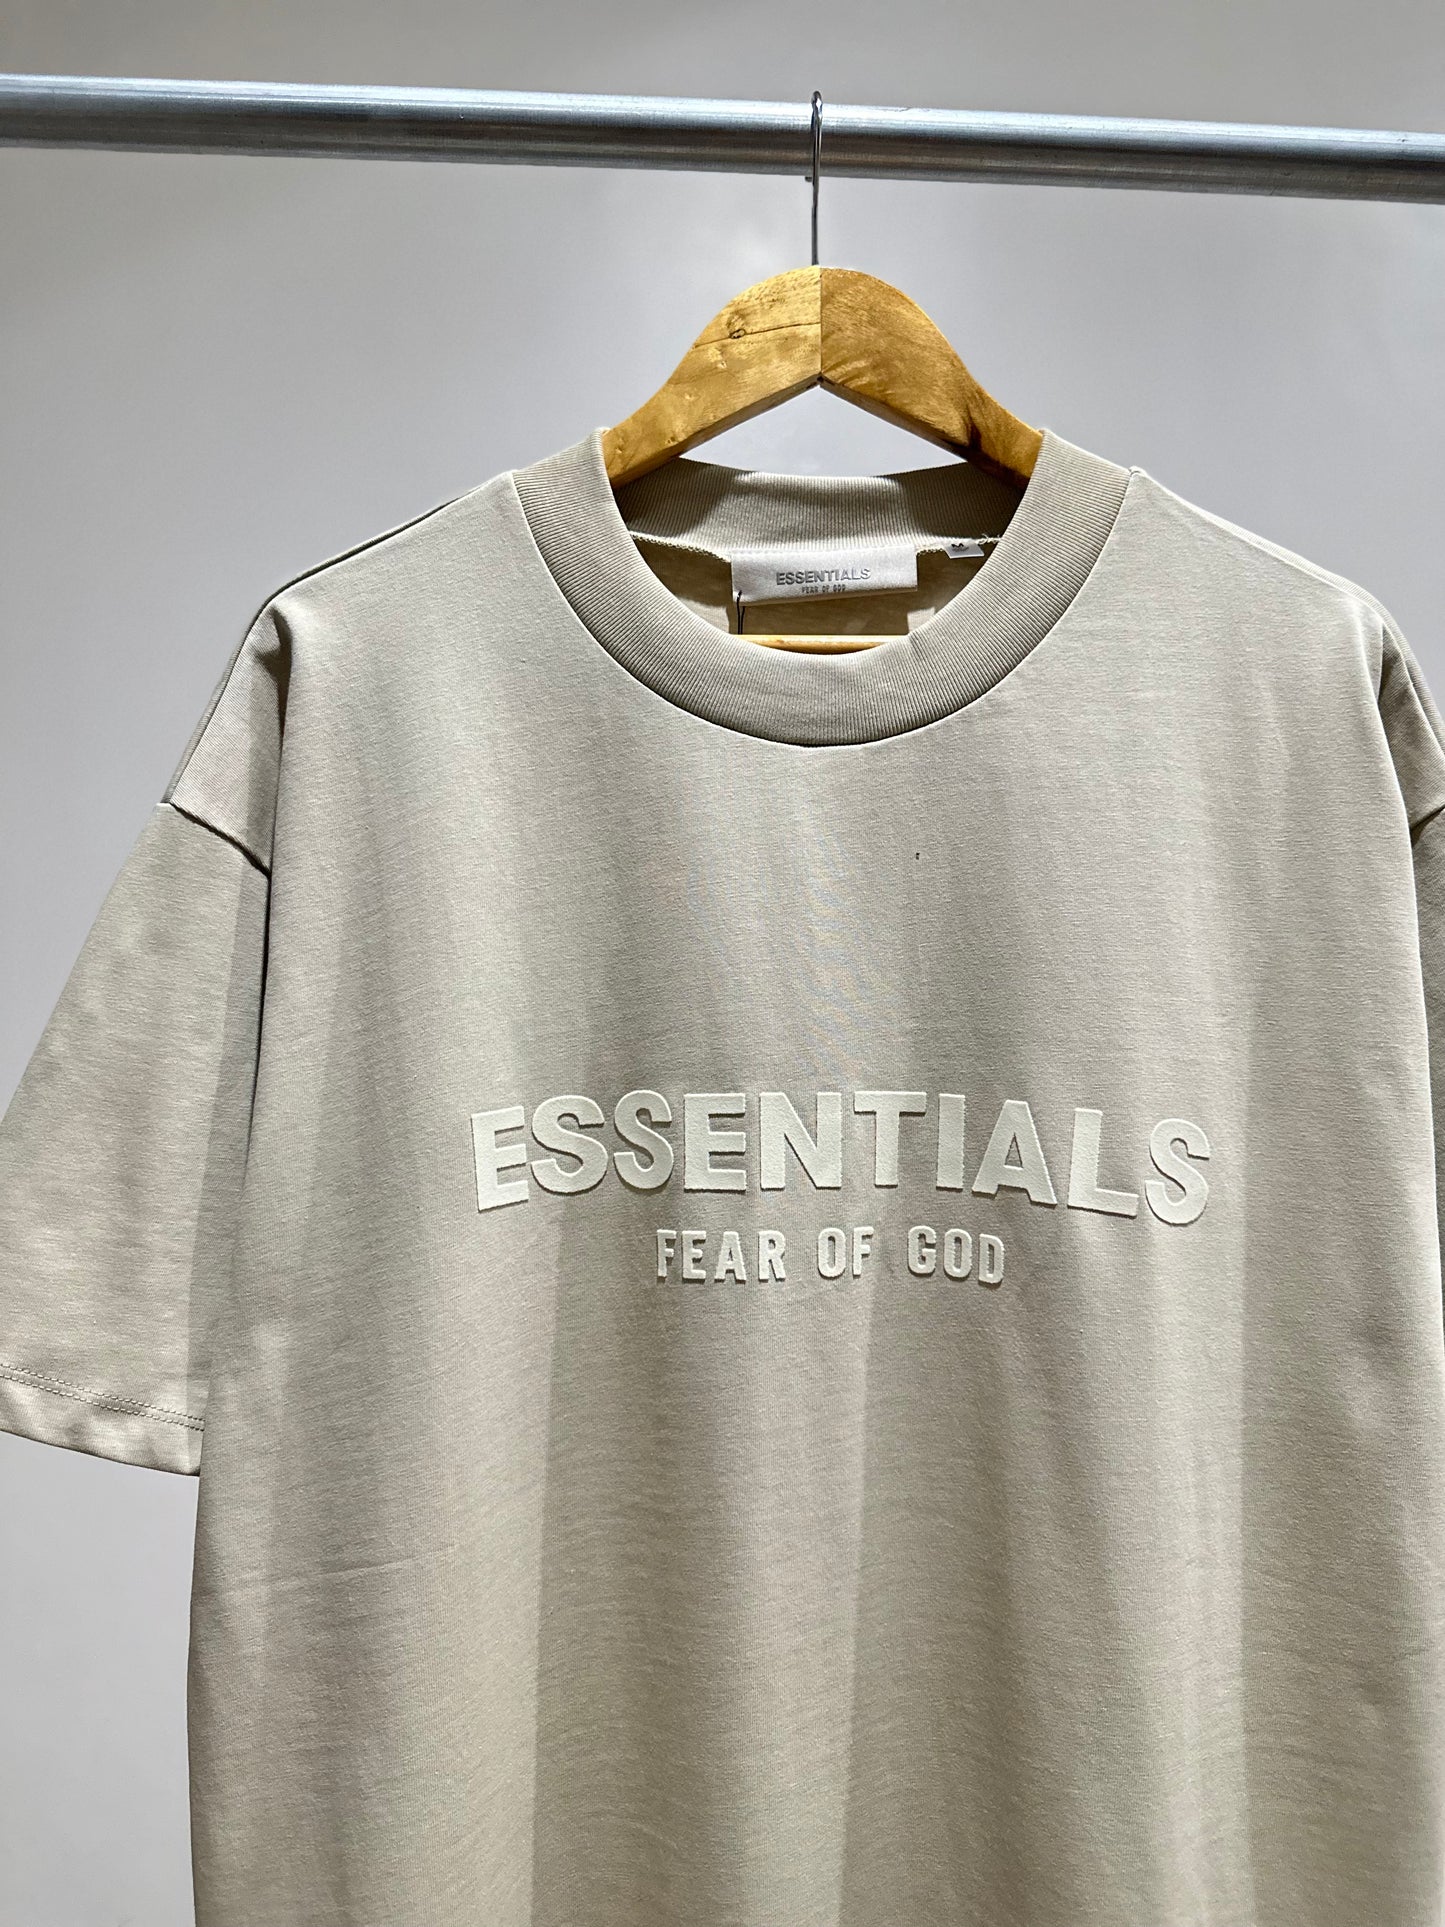 Essentials - Fear of God Tee (Eggshell)